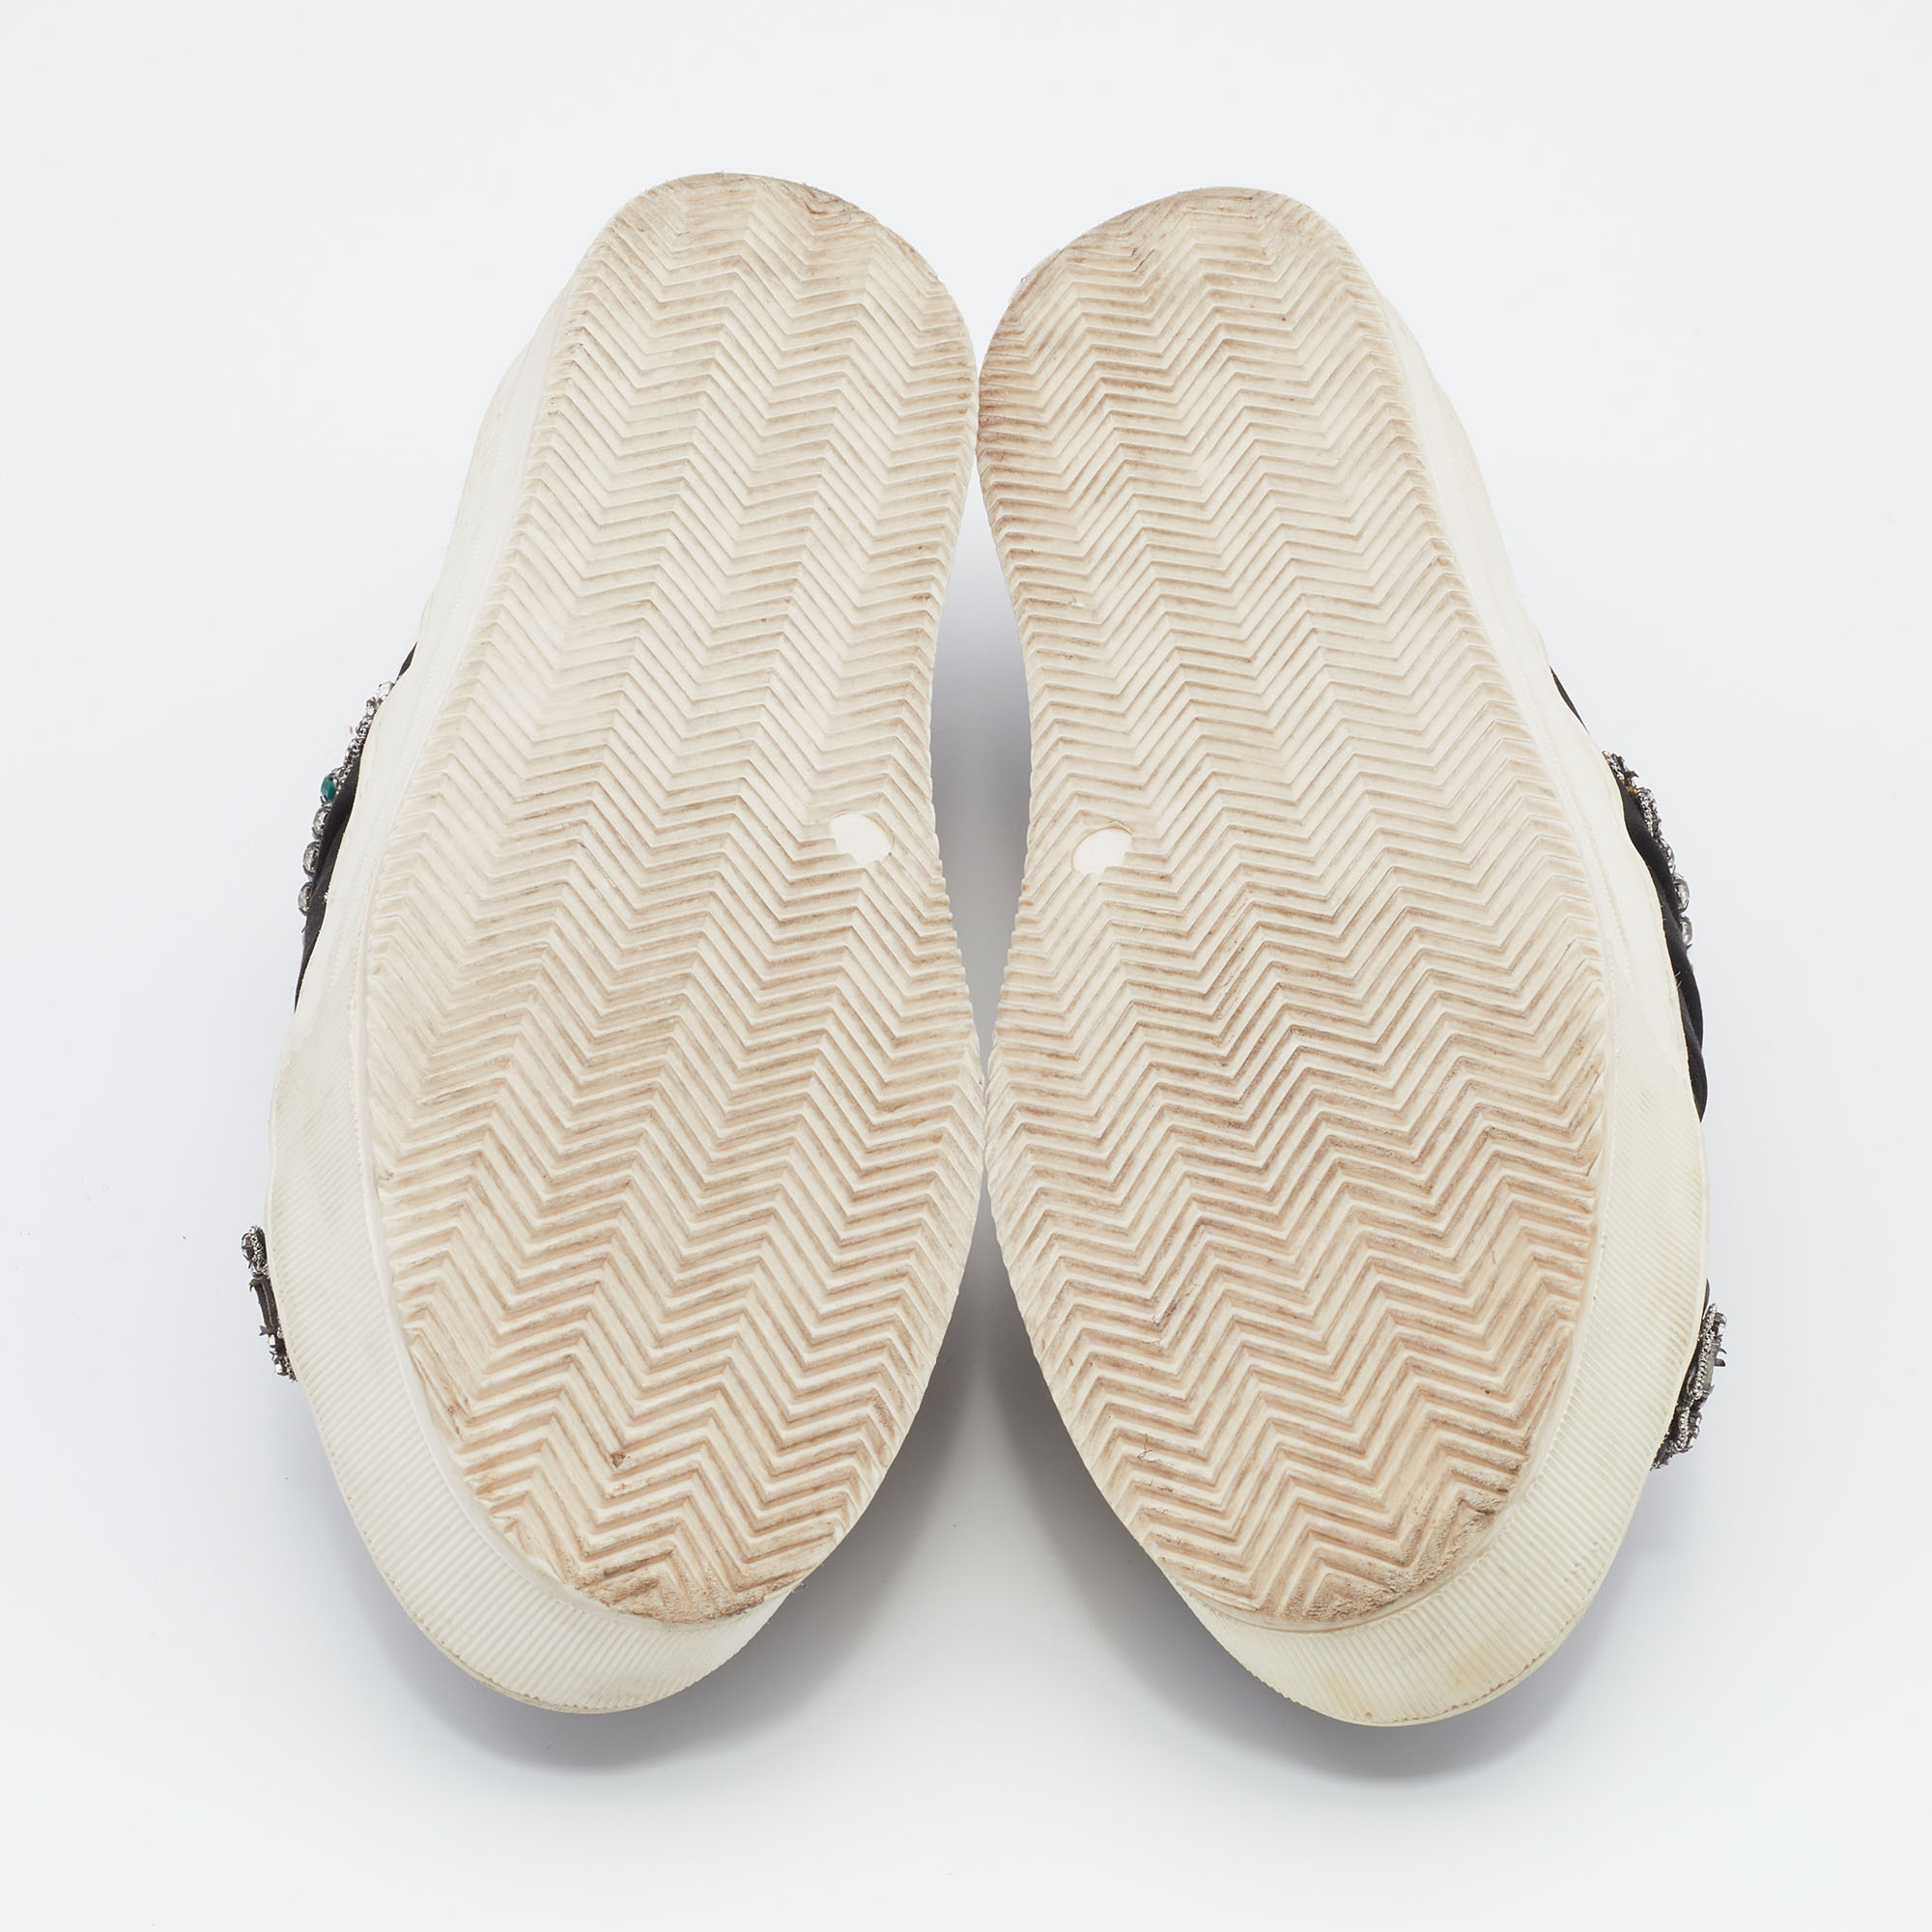 N21 Black/White Satin And Leather Crystal Embellished Platform Slip On Sneakers Size 37